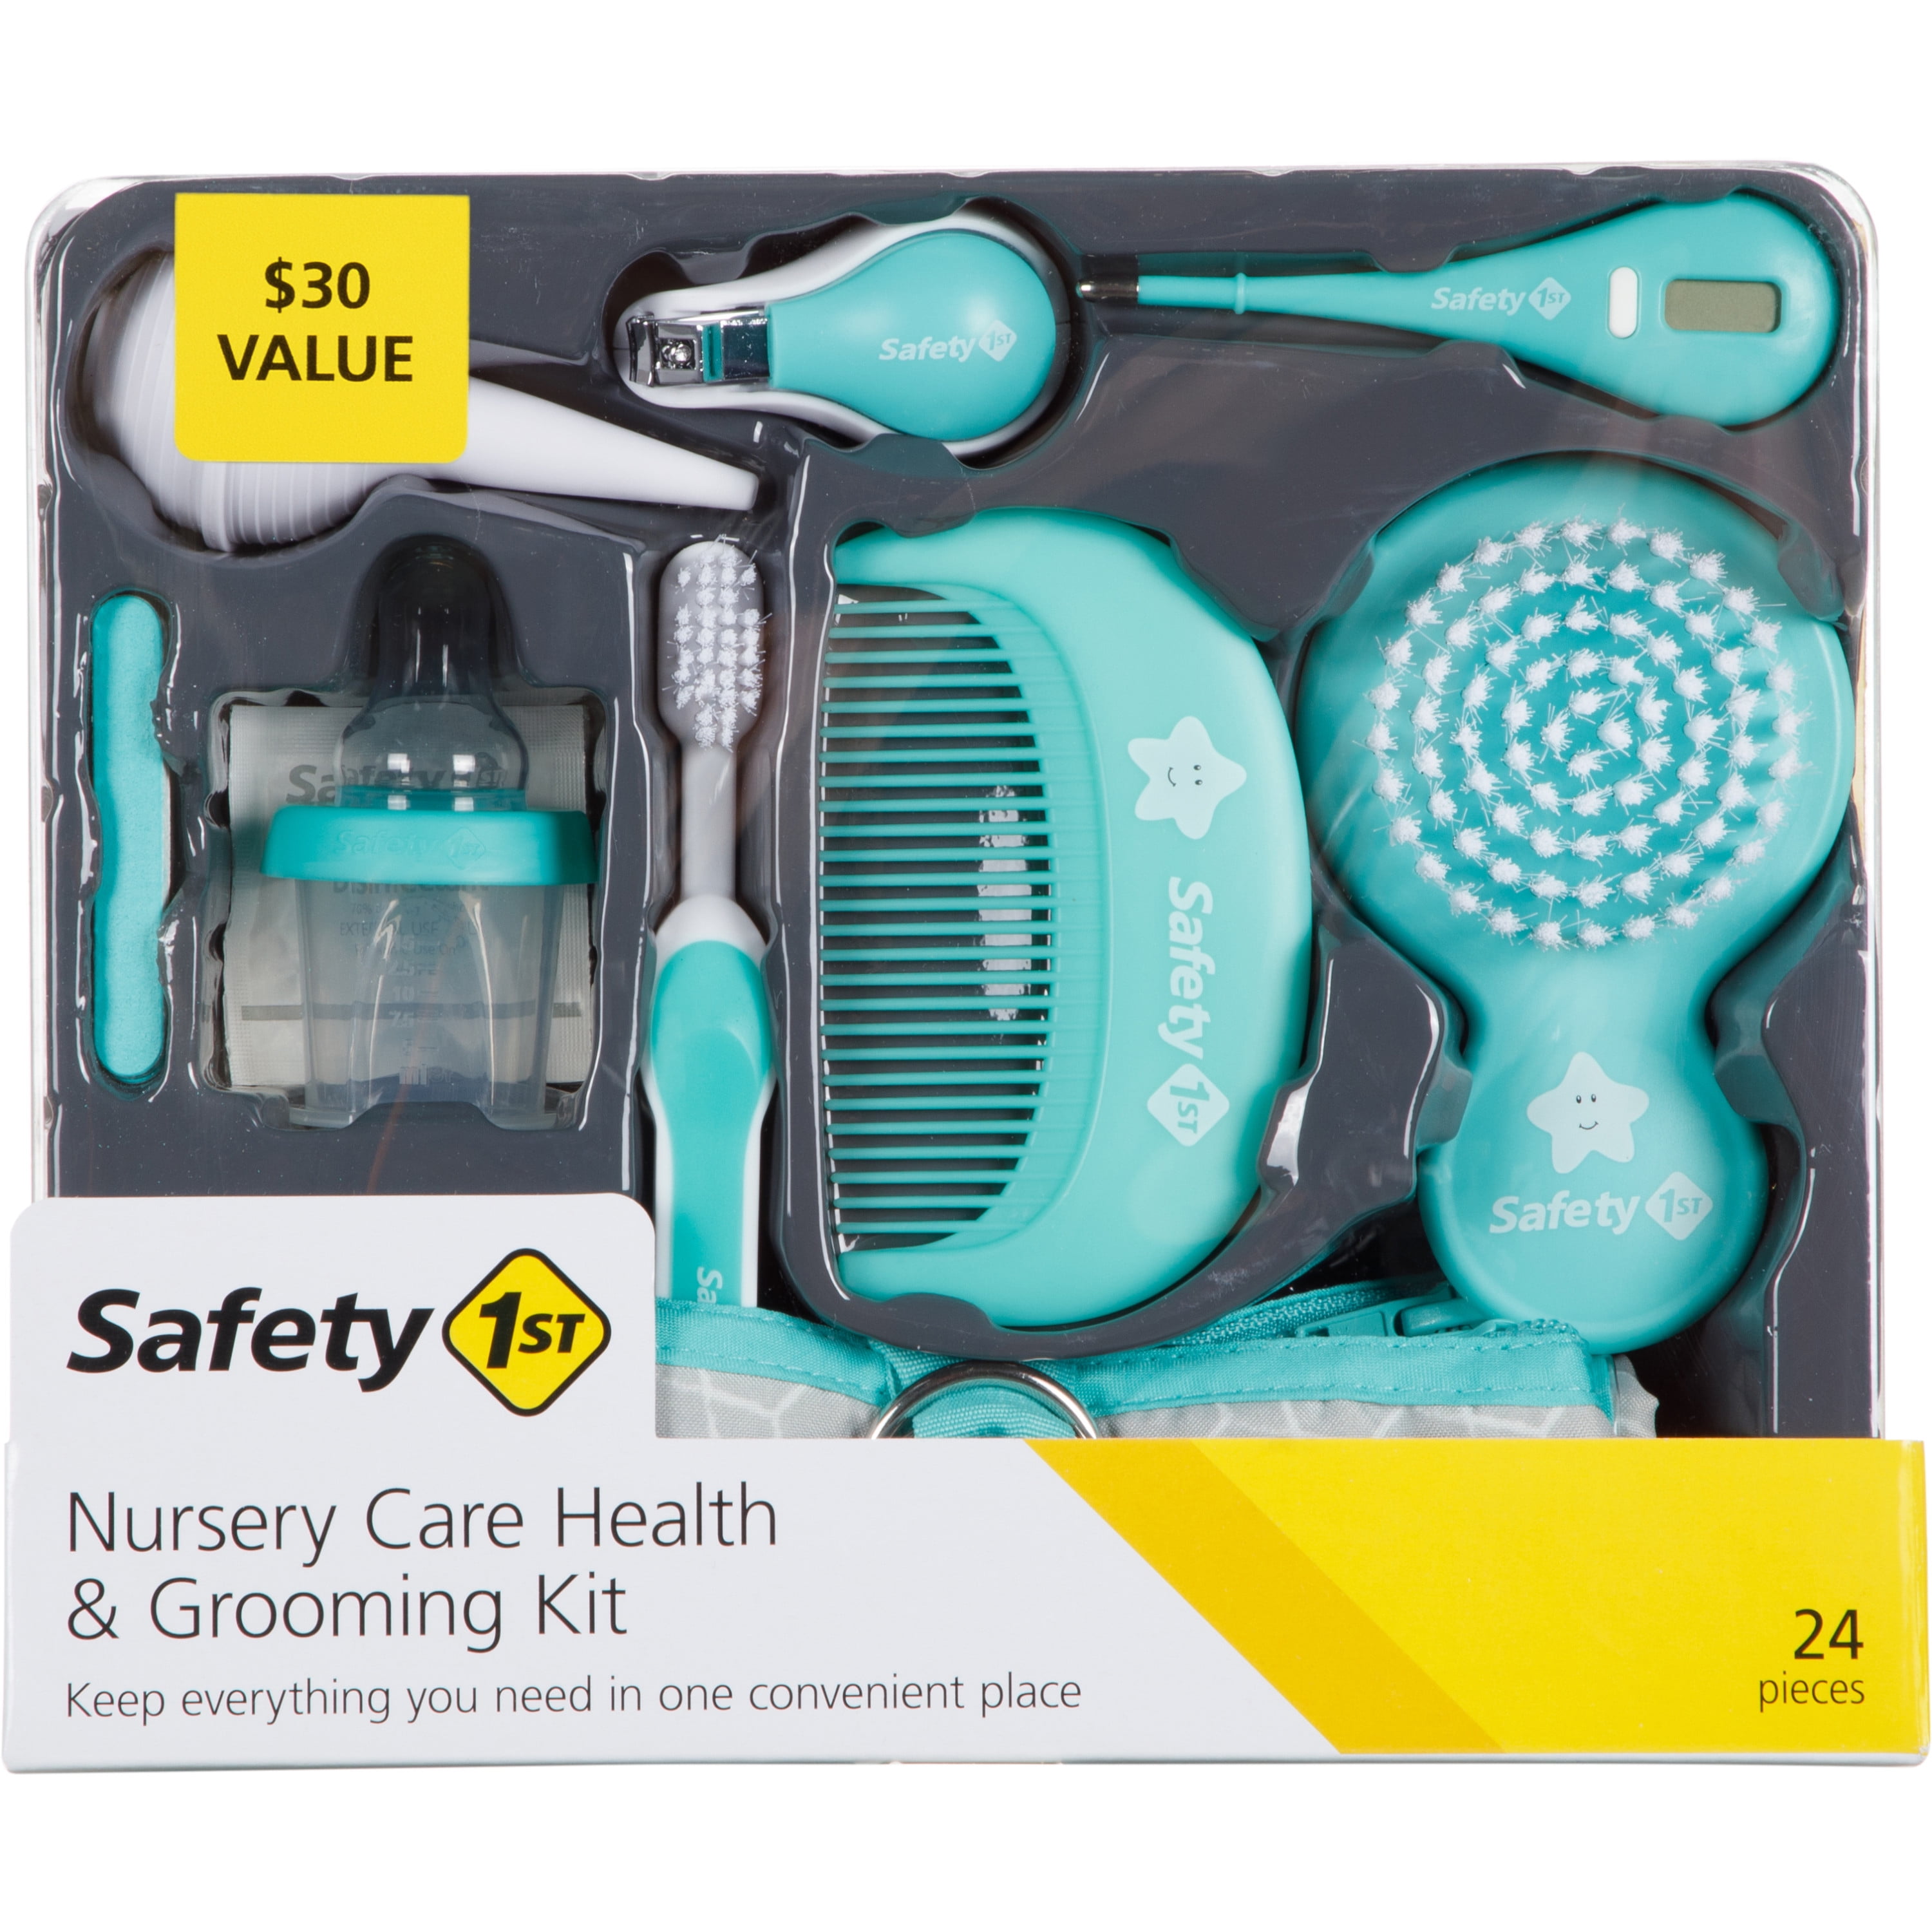 Safety 1st Safety 1ˢᵗ Nursery Care Health & Grooming Kit, Seafoam